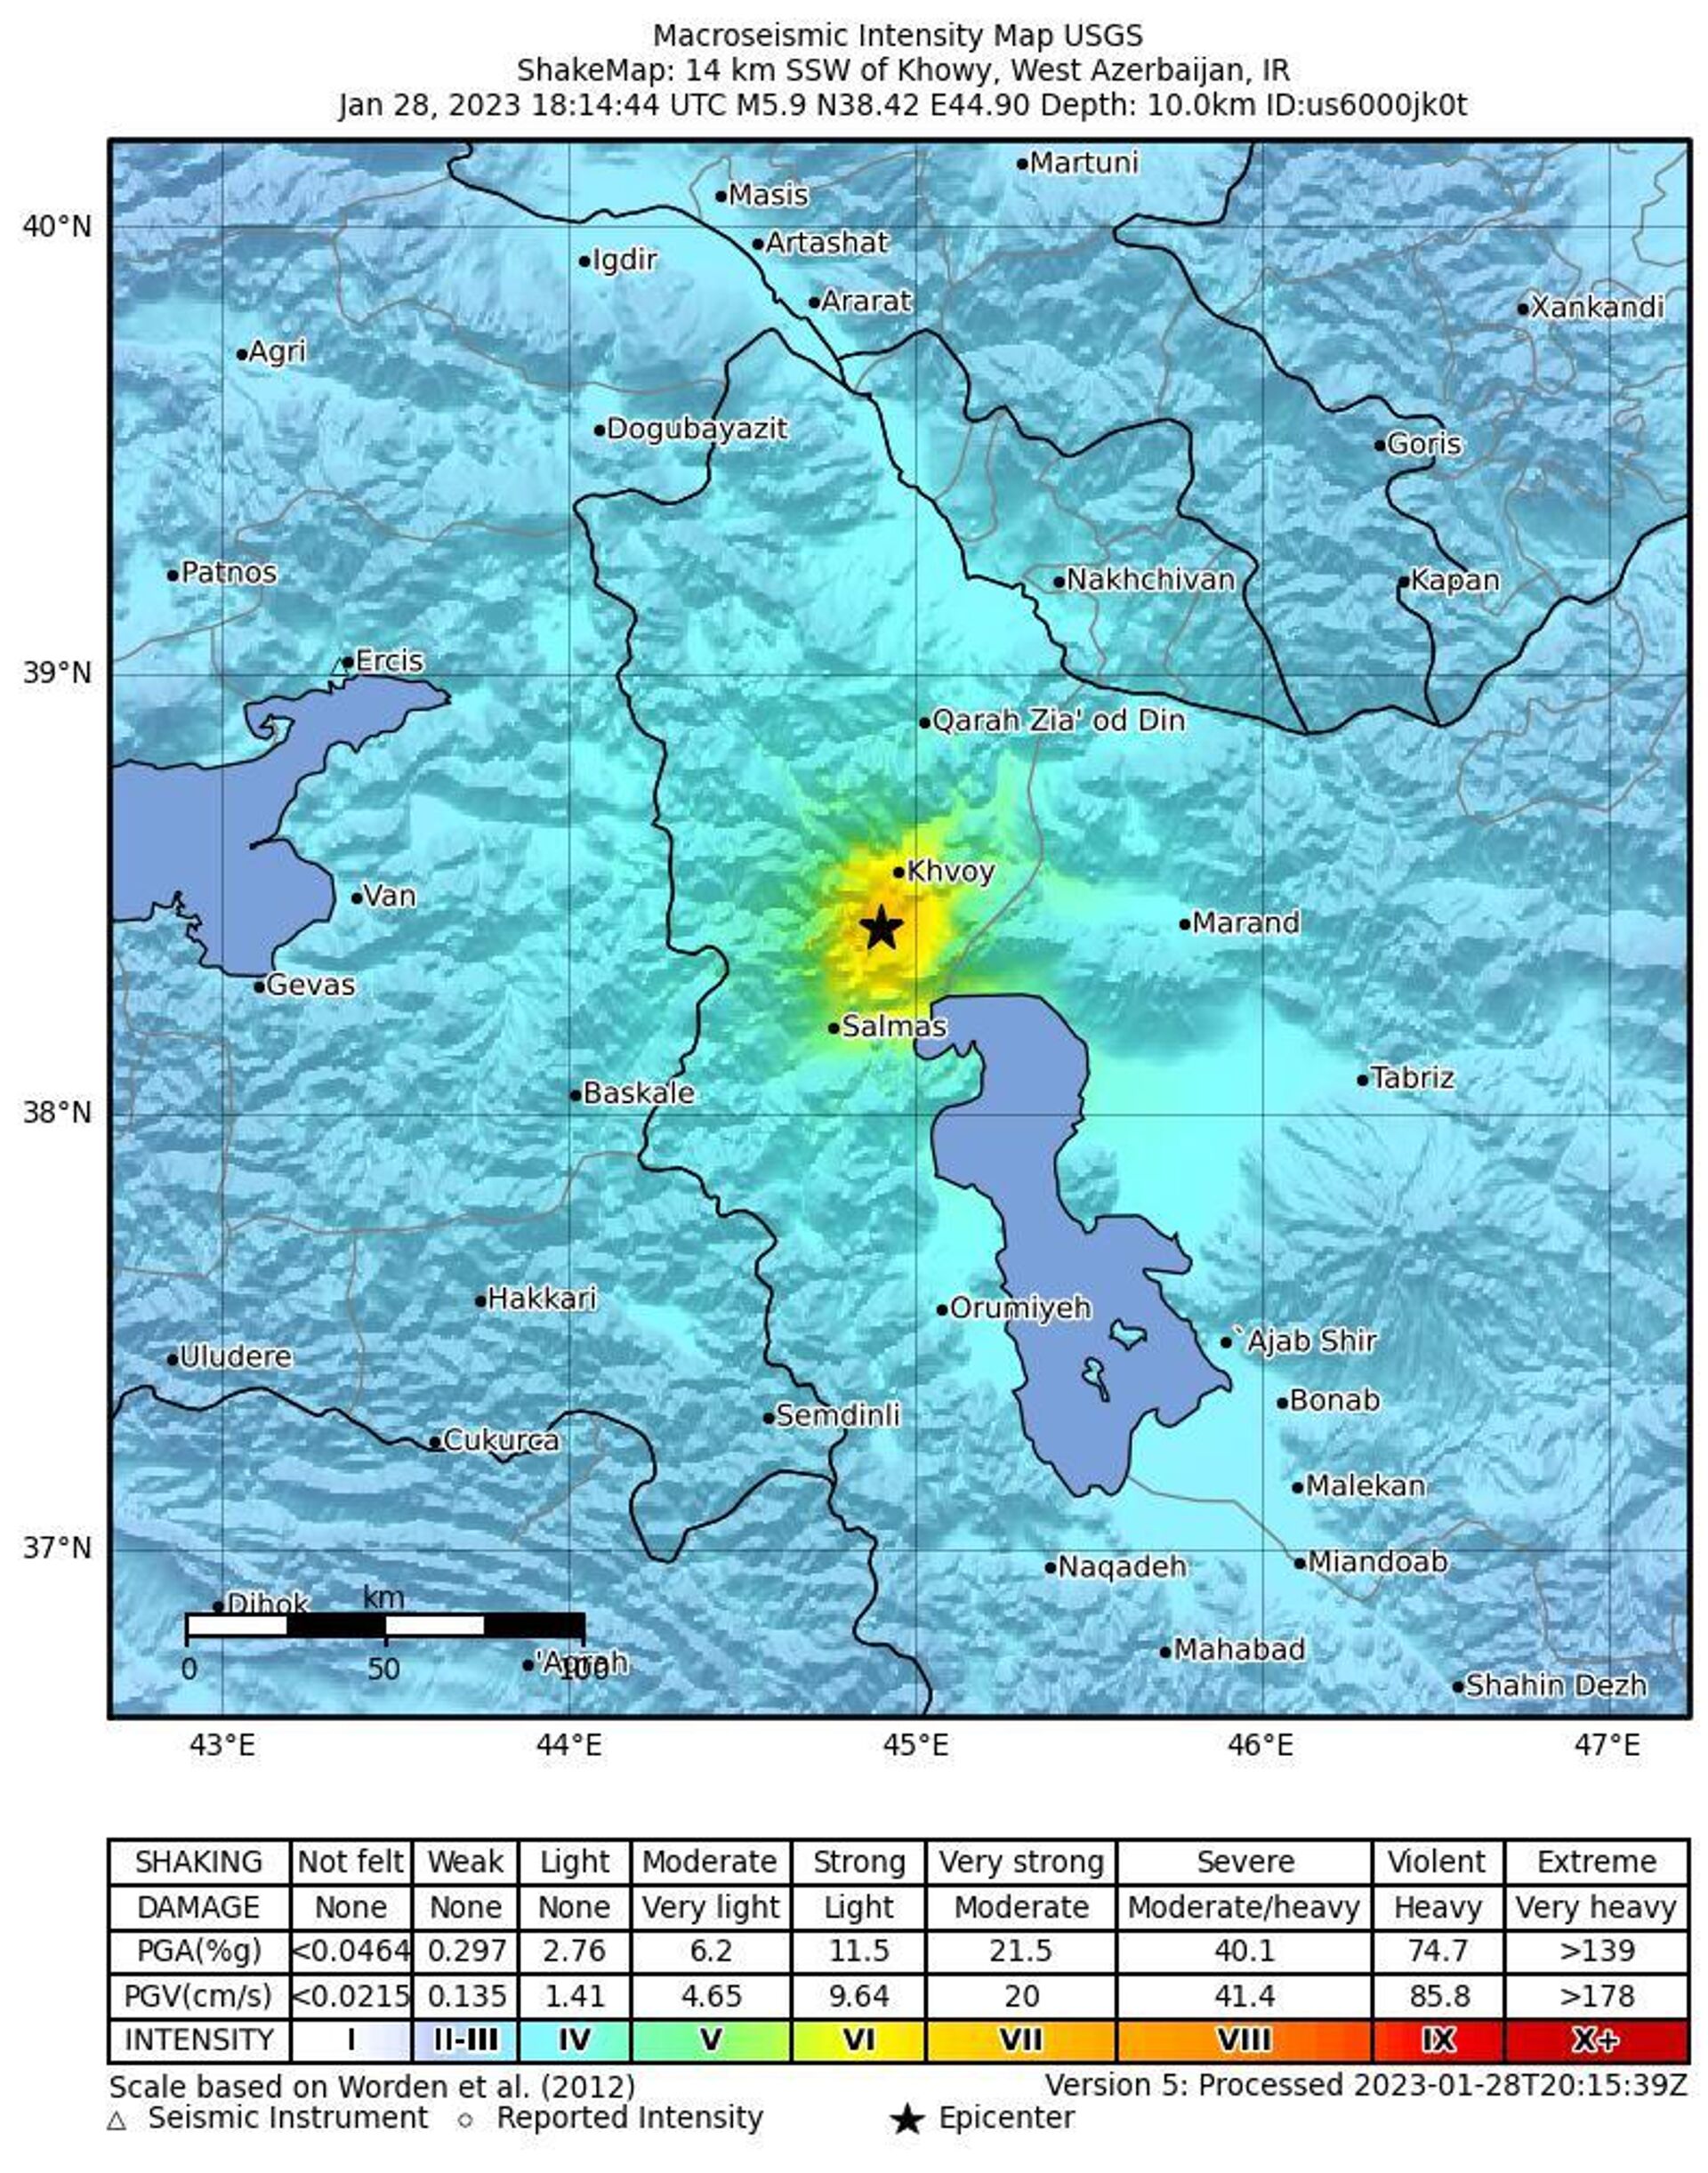 Shake Map of an Earthquake that occurred near the city of Khoy, Iran on January 28, 2023 - Sputnik International, 1920, 28.01.2023